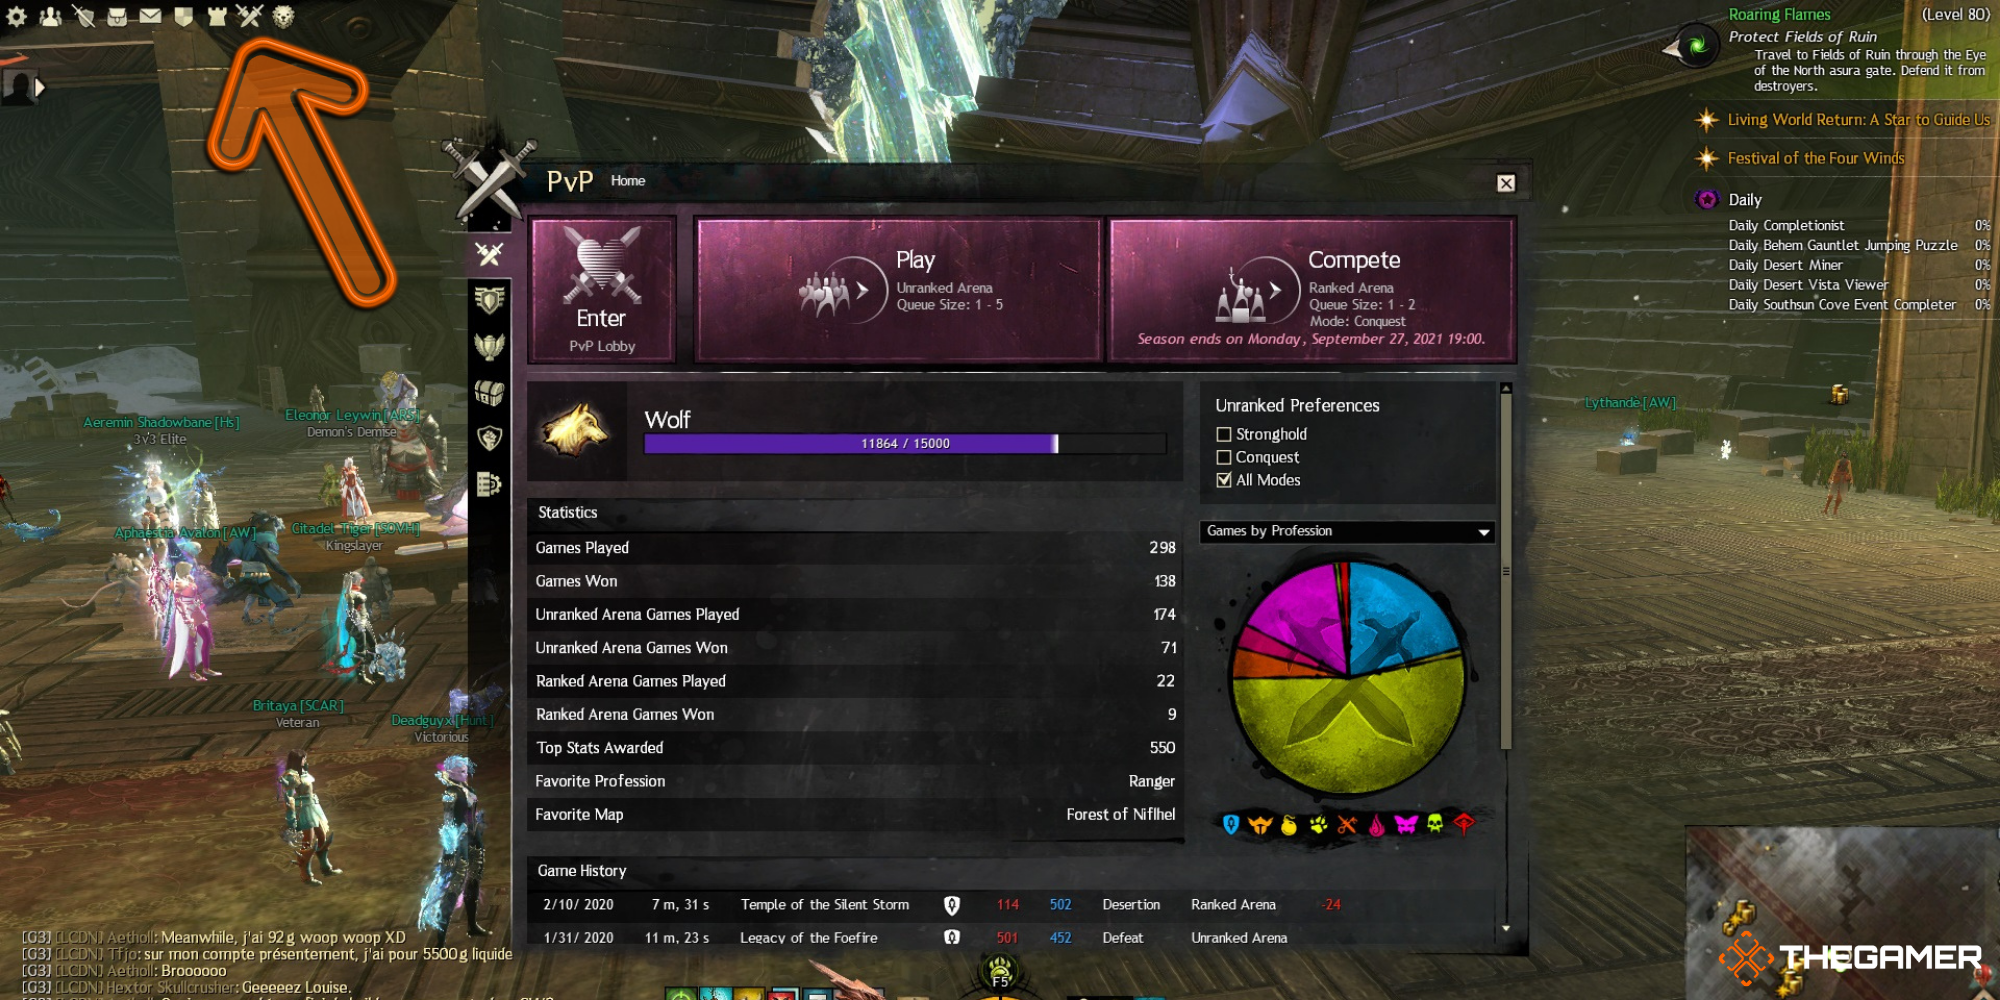 GW2 - Screenshot showing the player how to reach the PvP menu